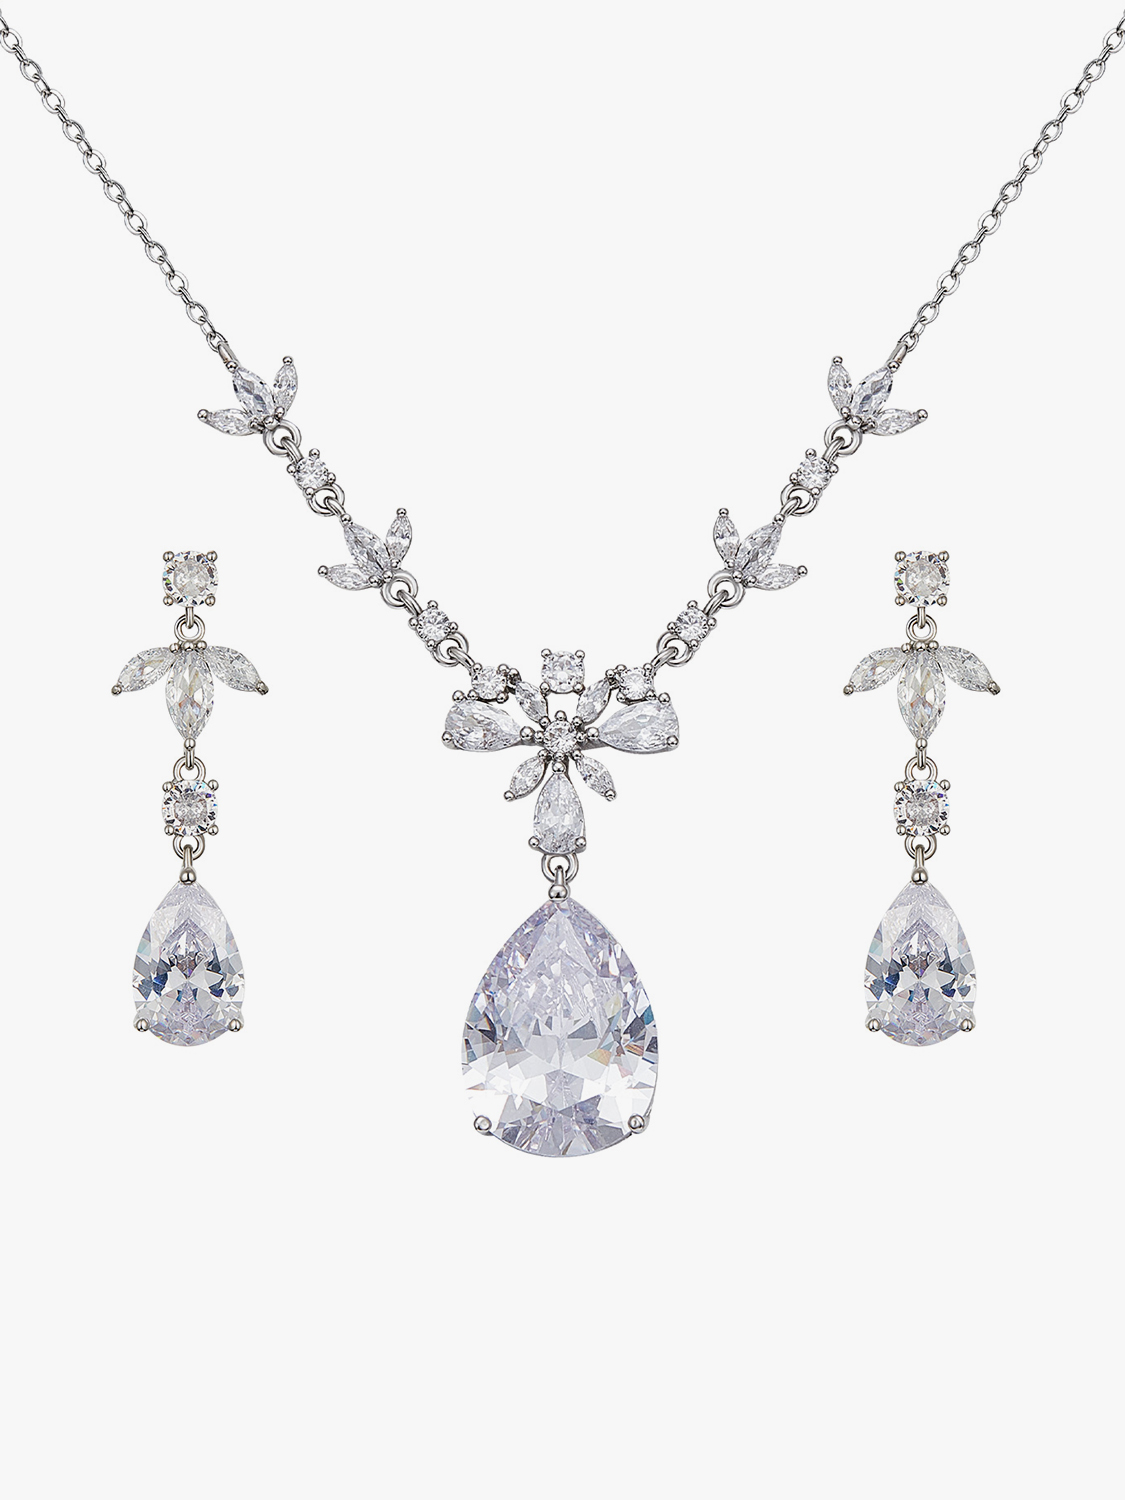 Crystal Bridal Necklace Drop Earrings Set,Prom Costume Bridal Wedding Jewelry SWEETV Teardrop Wedding Jewelry Sets for Women Brides Bridesmaids 